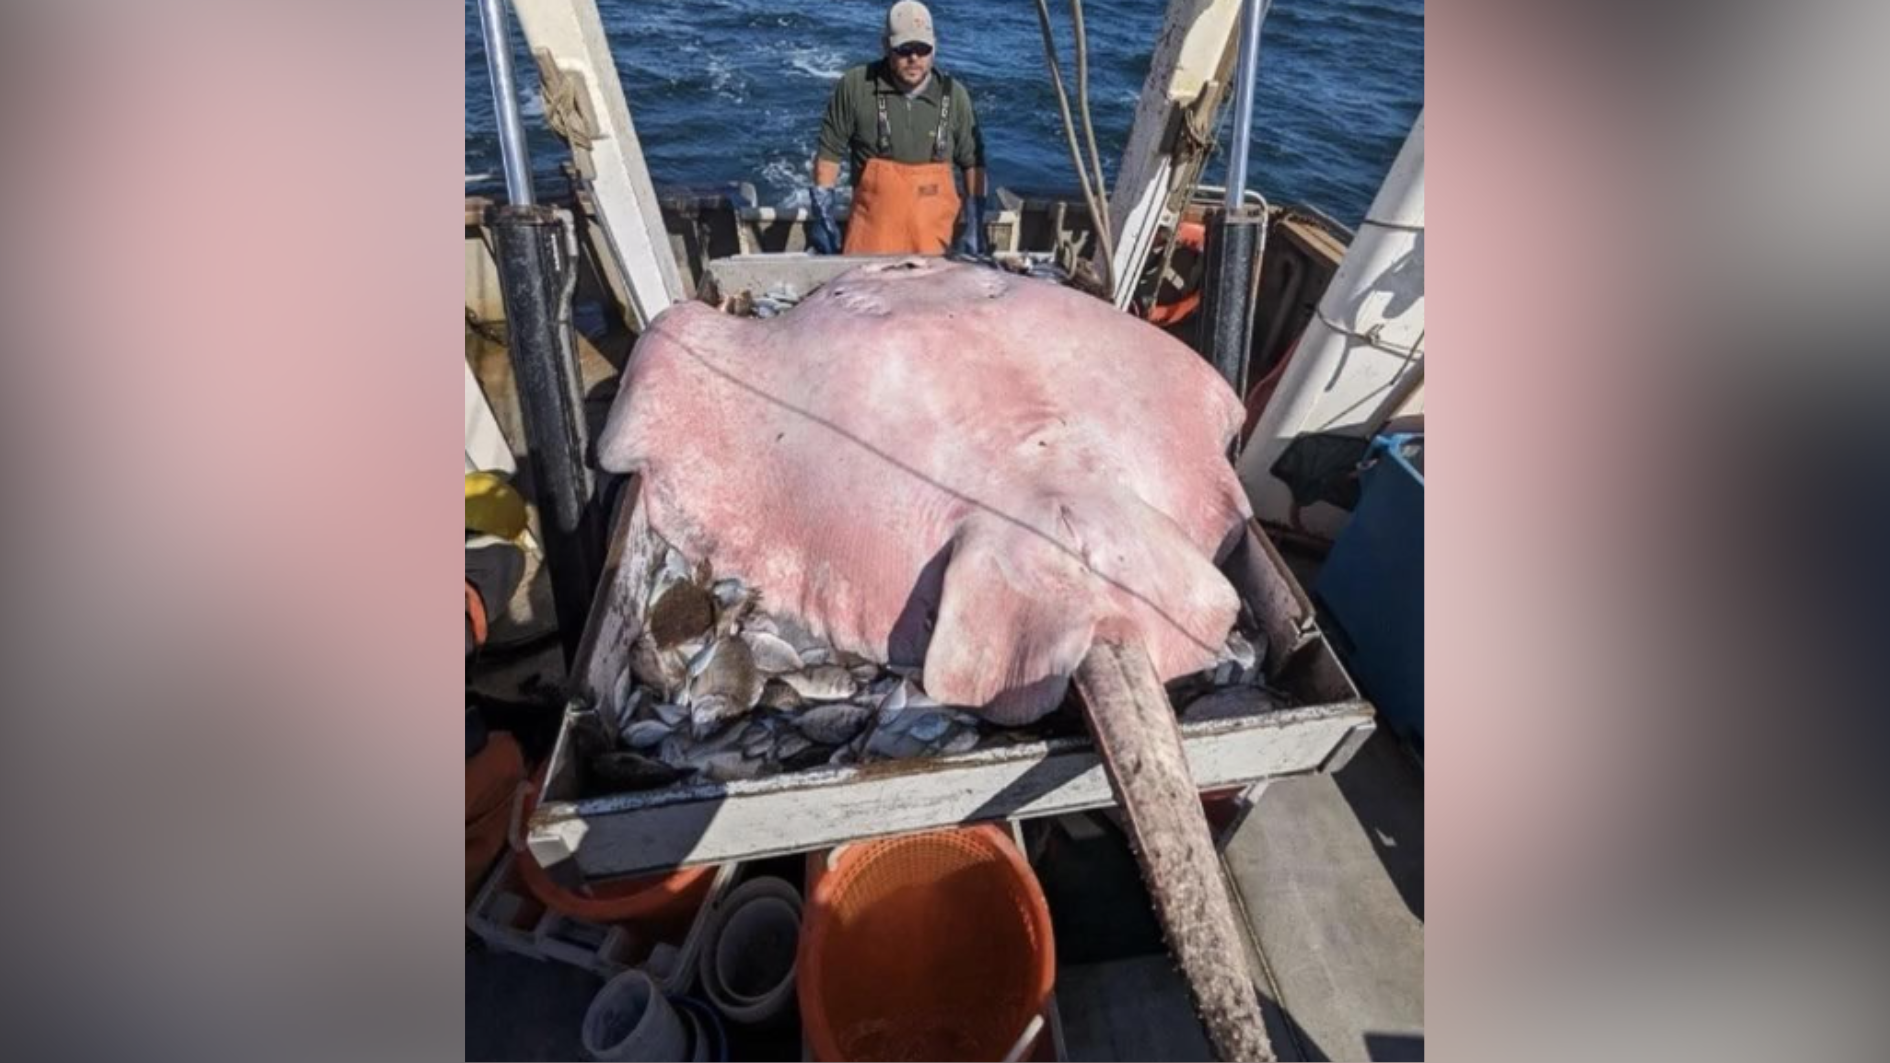 What a catch! Crews catch 400-pound stingray along Atlantic coast